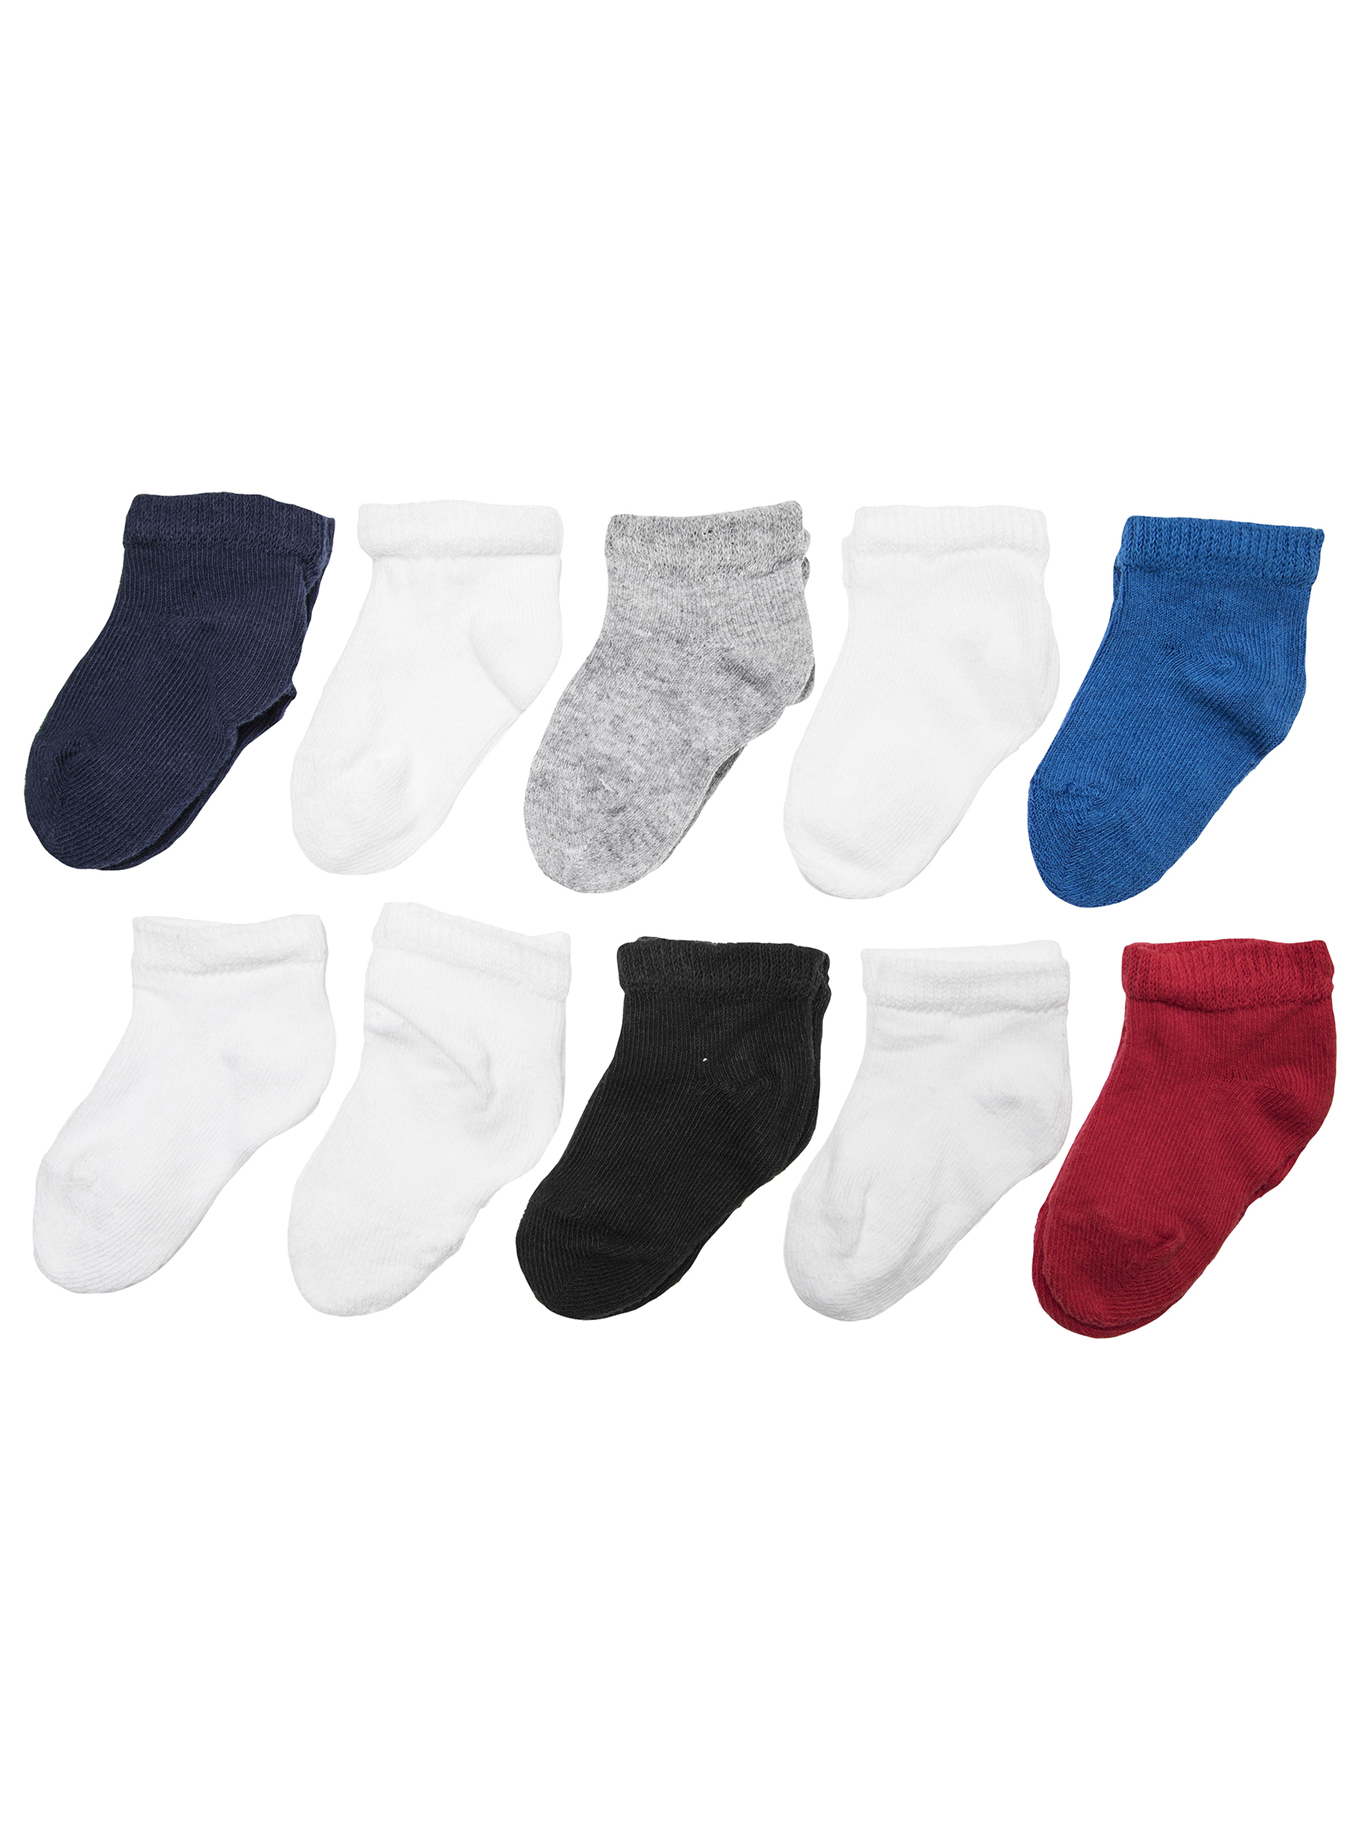 Garanimals Assorted Ankle Socks, 10-Pack (Baby Boys & Toddler Boys) - image 1 of 3